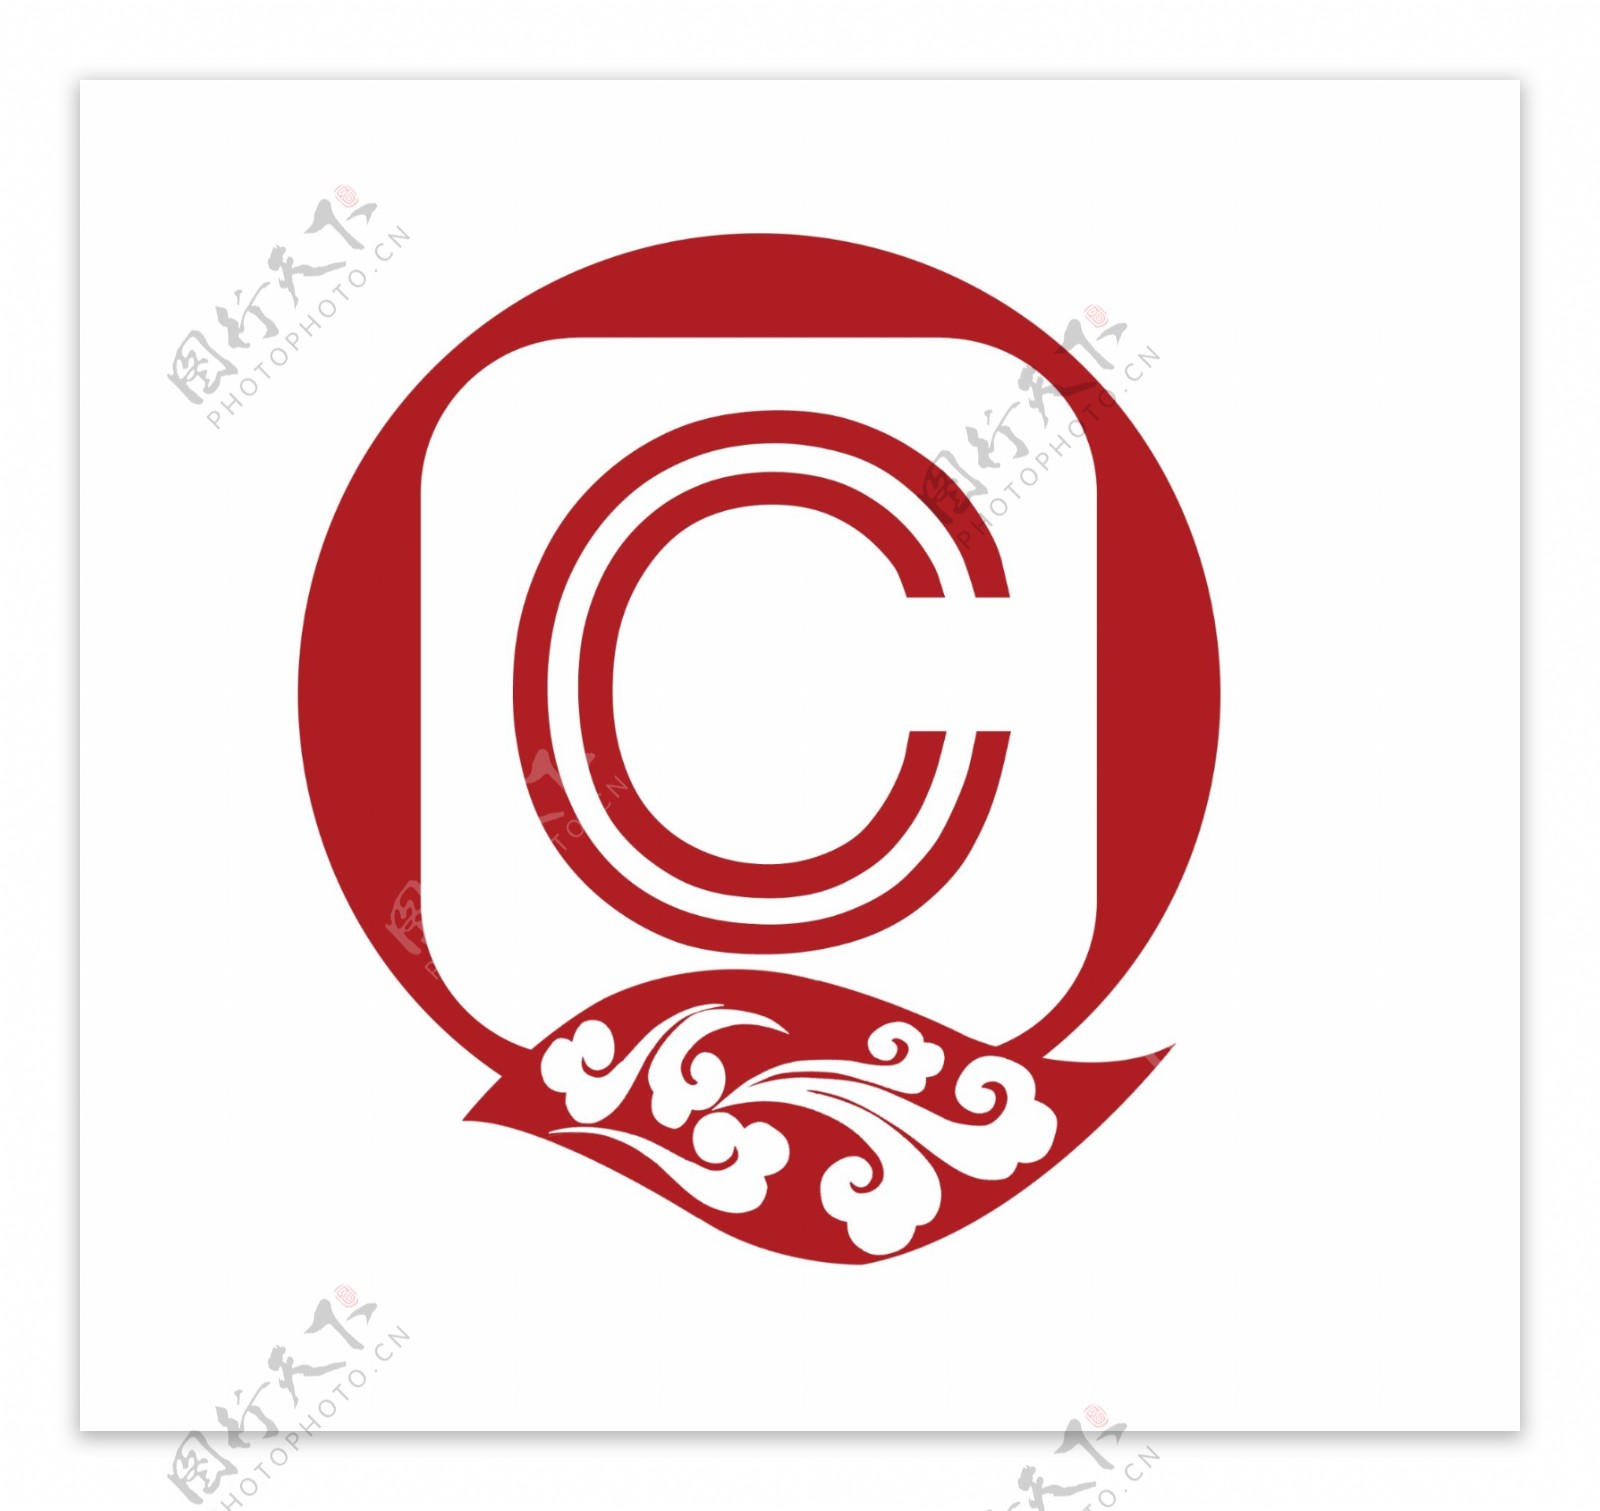 qc字母logo设计图片